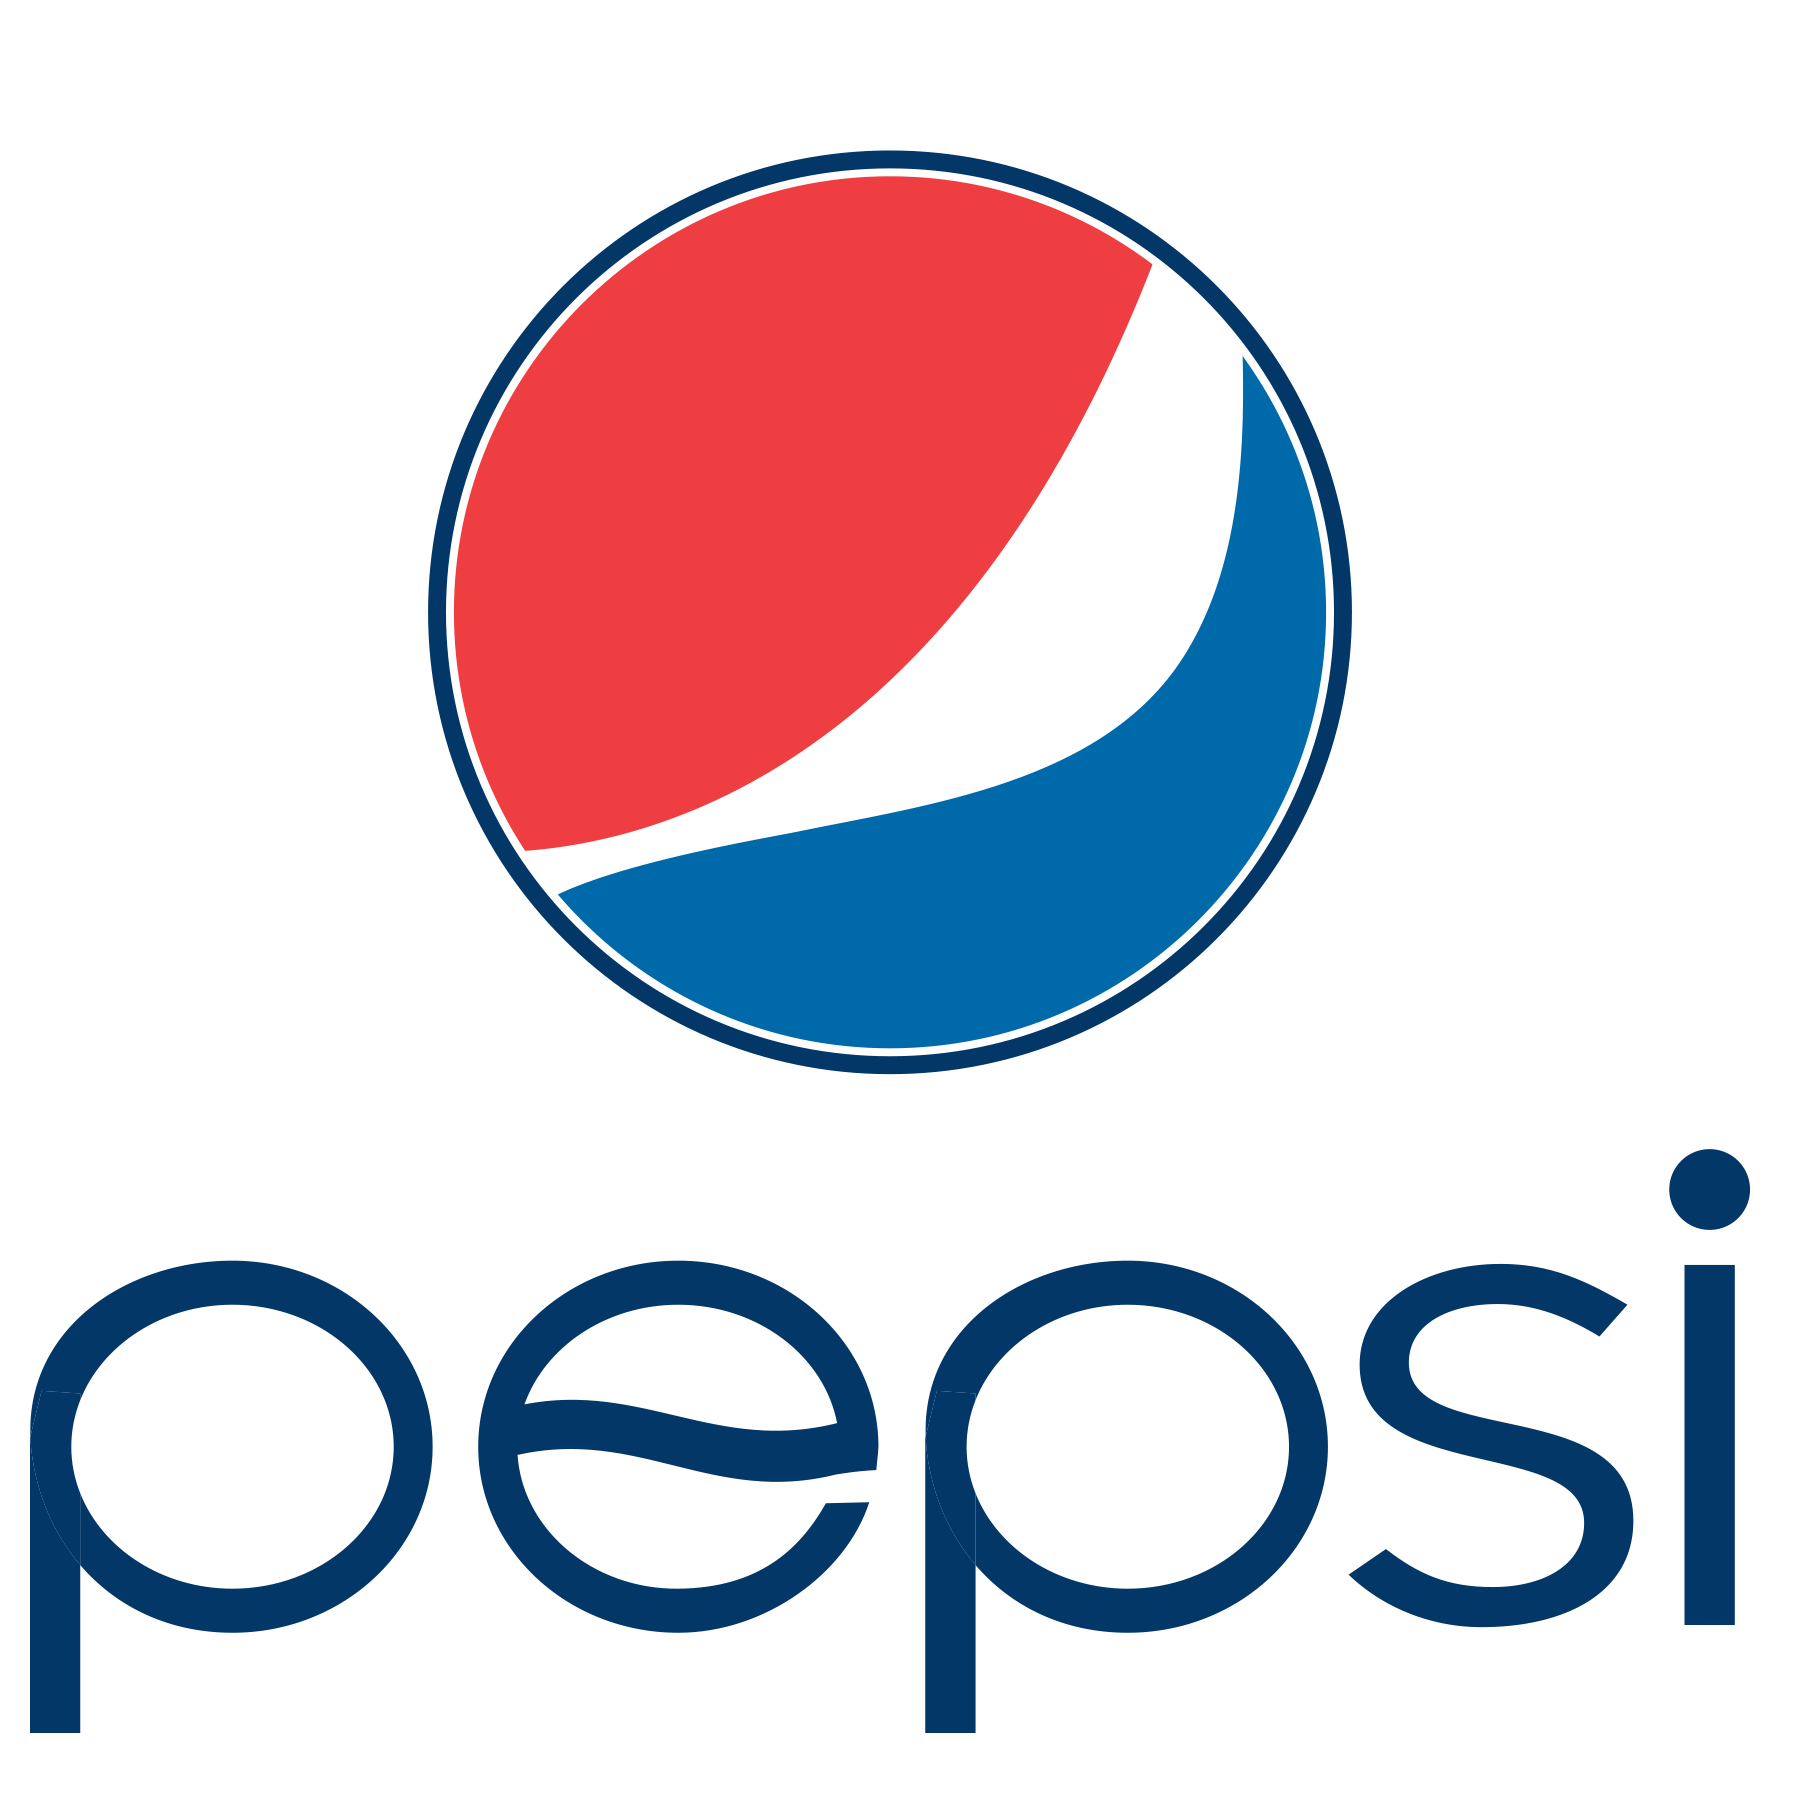 kisspng-pepsi-globe-coca-cola-logo-portable-network-graphi-5c5369cdd7d8b6.2995682815489704458841 Paul Bunyan Challenge